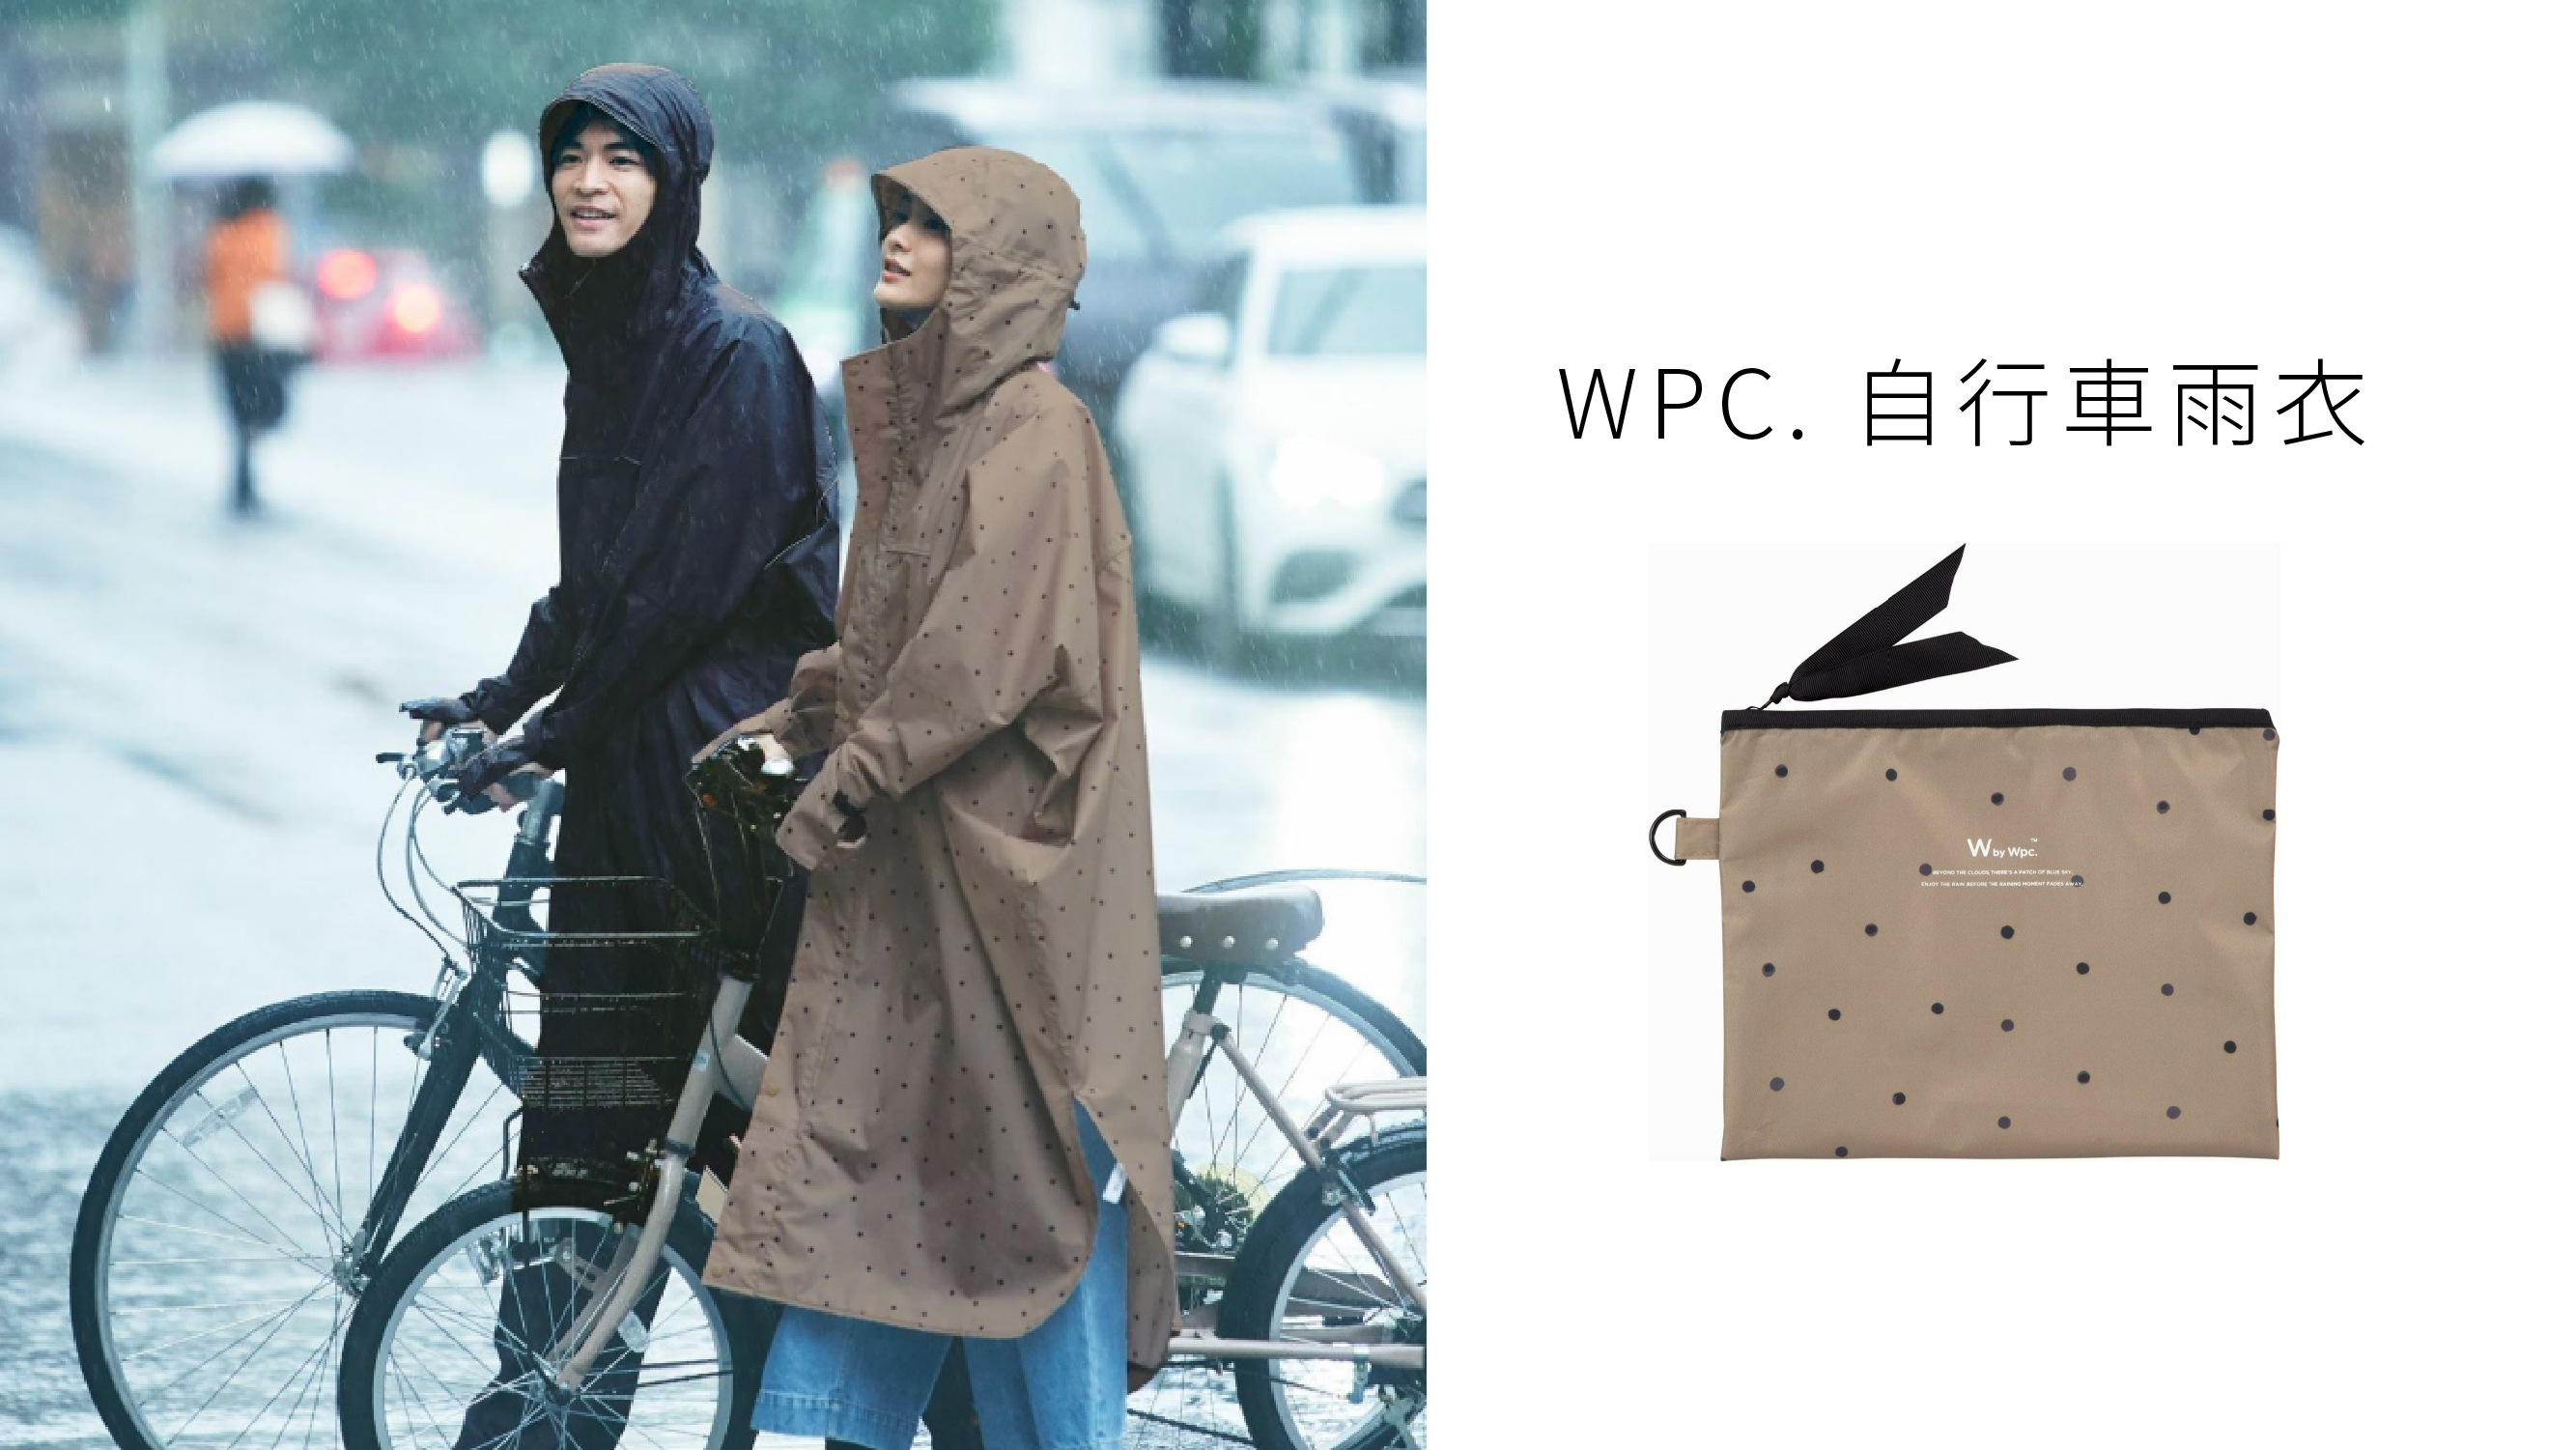 Wpc. bicycle raincoat